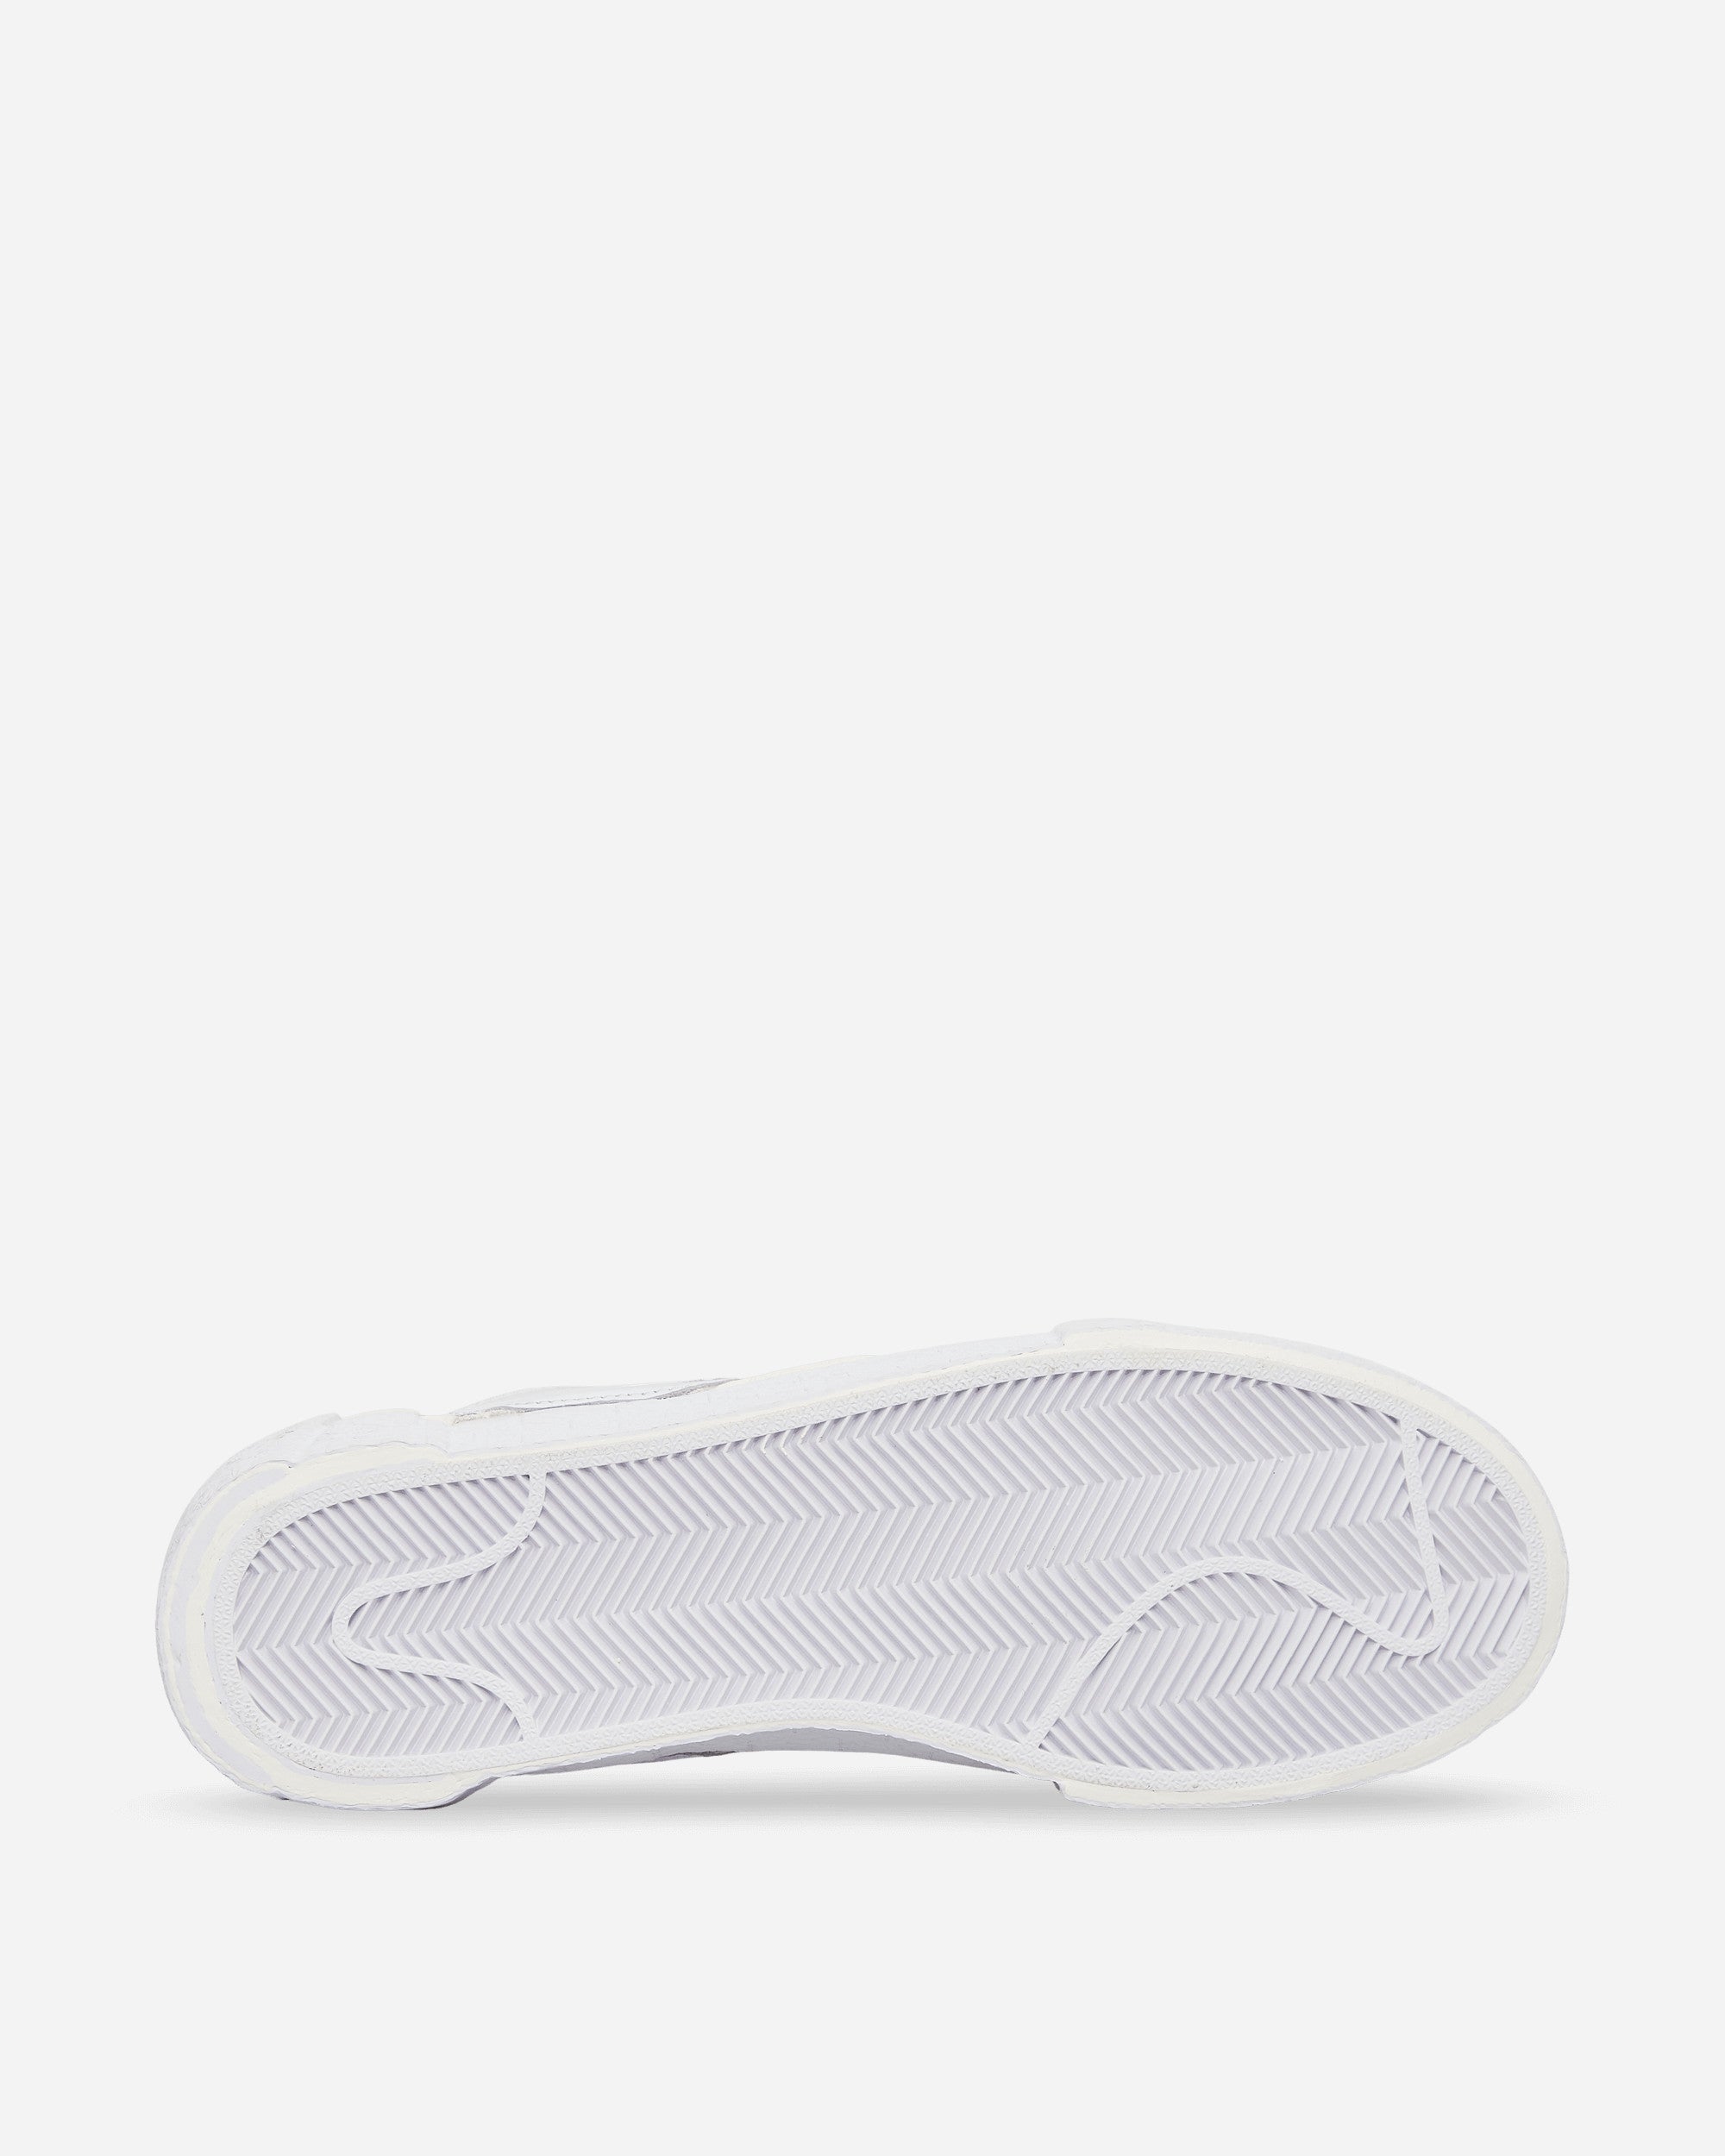 Nike Special Project Blazer Low/ Sacai White/Sail Sneakers Low DM6443-100